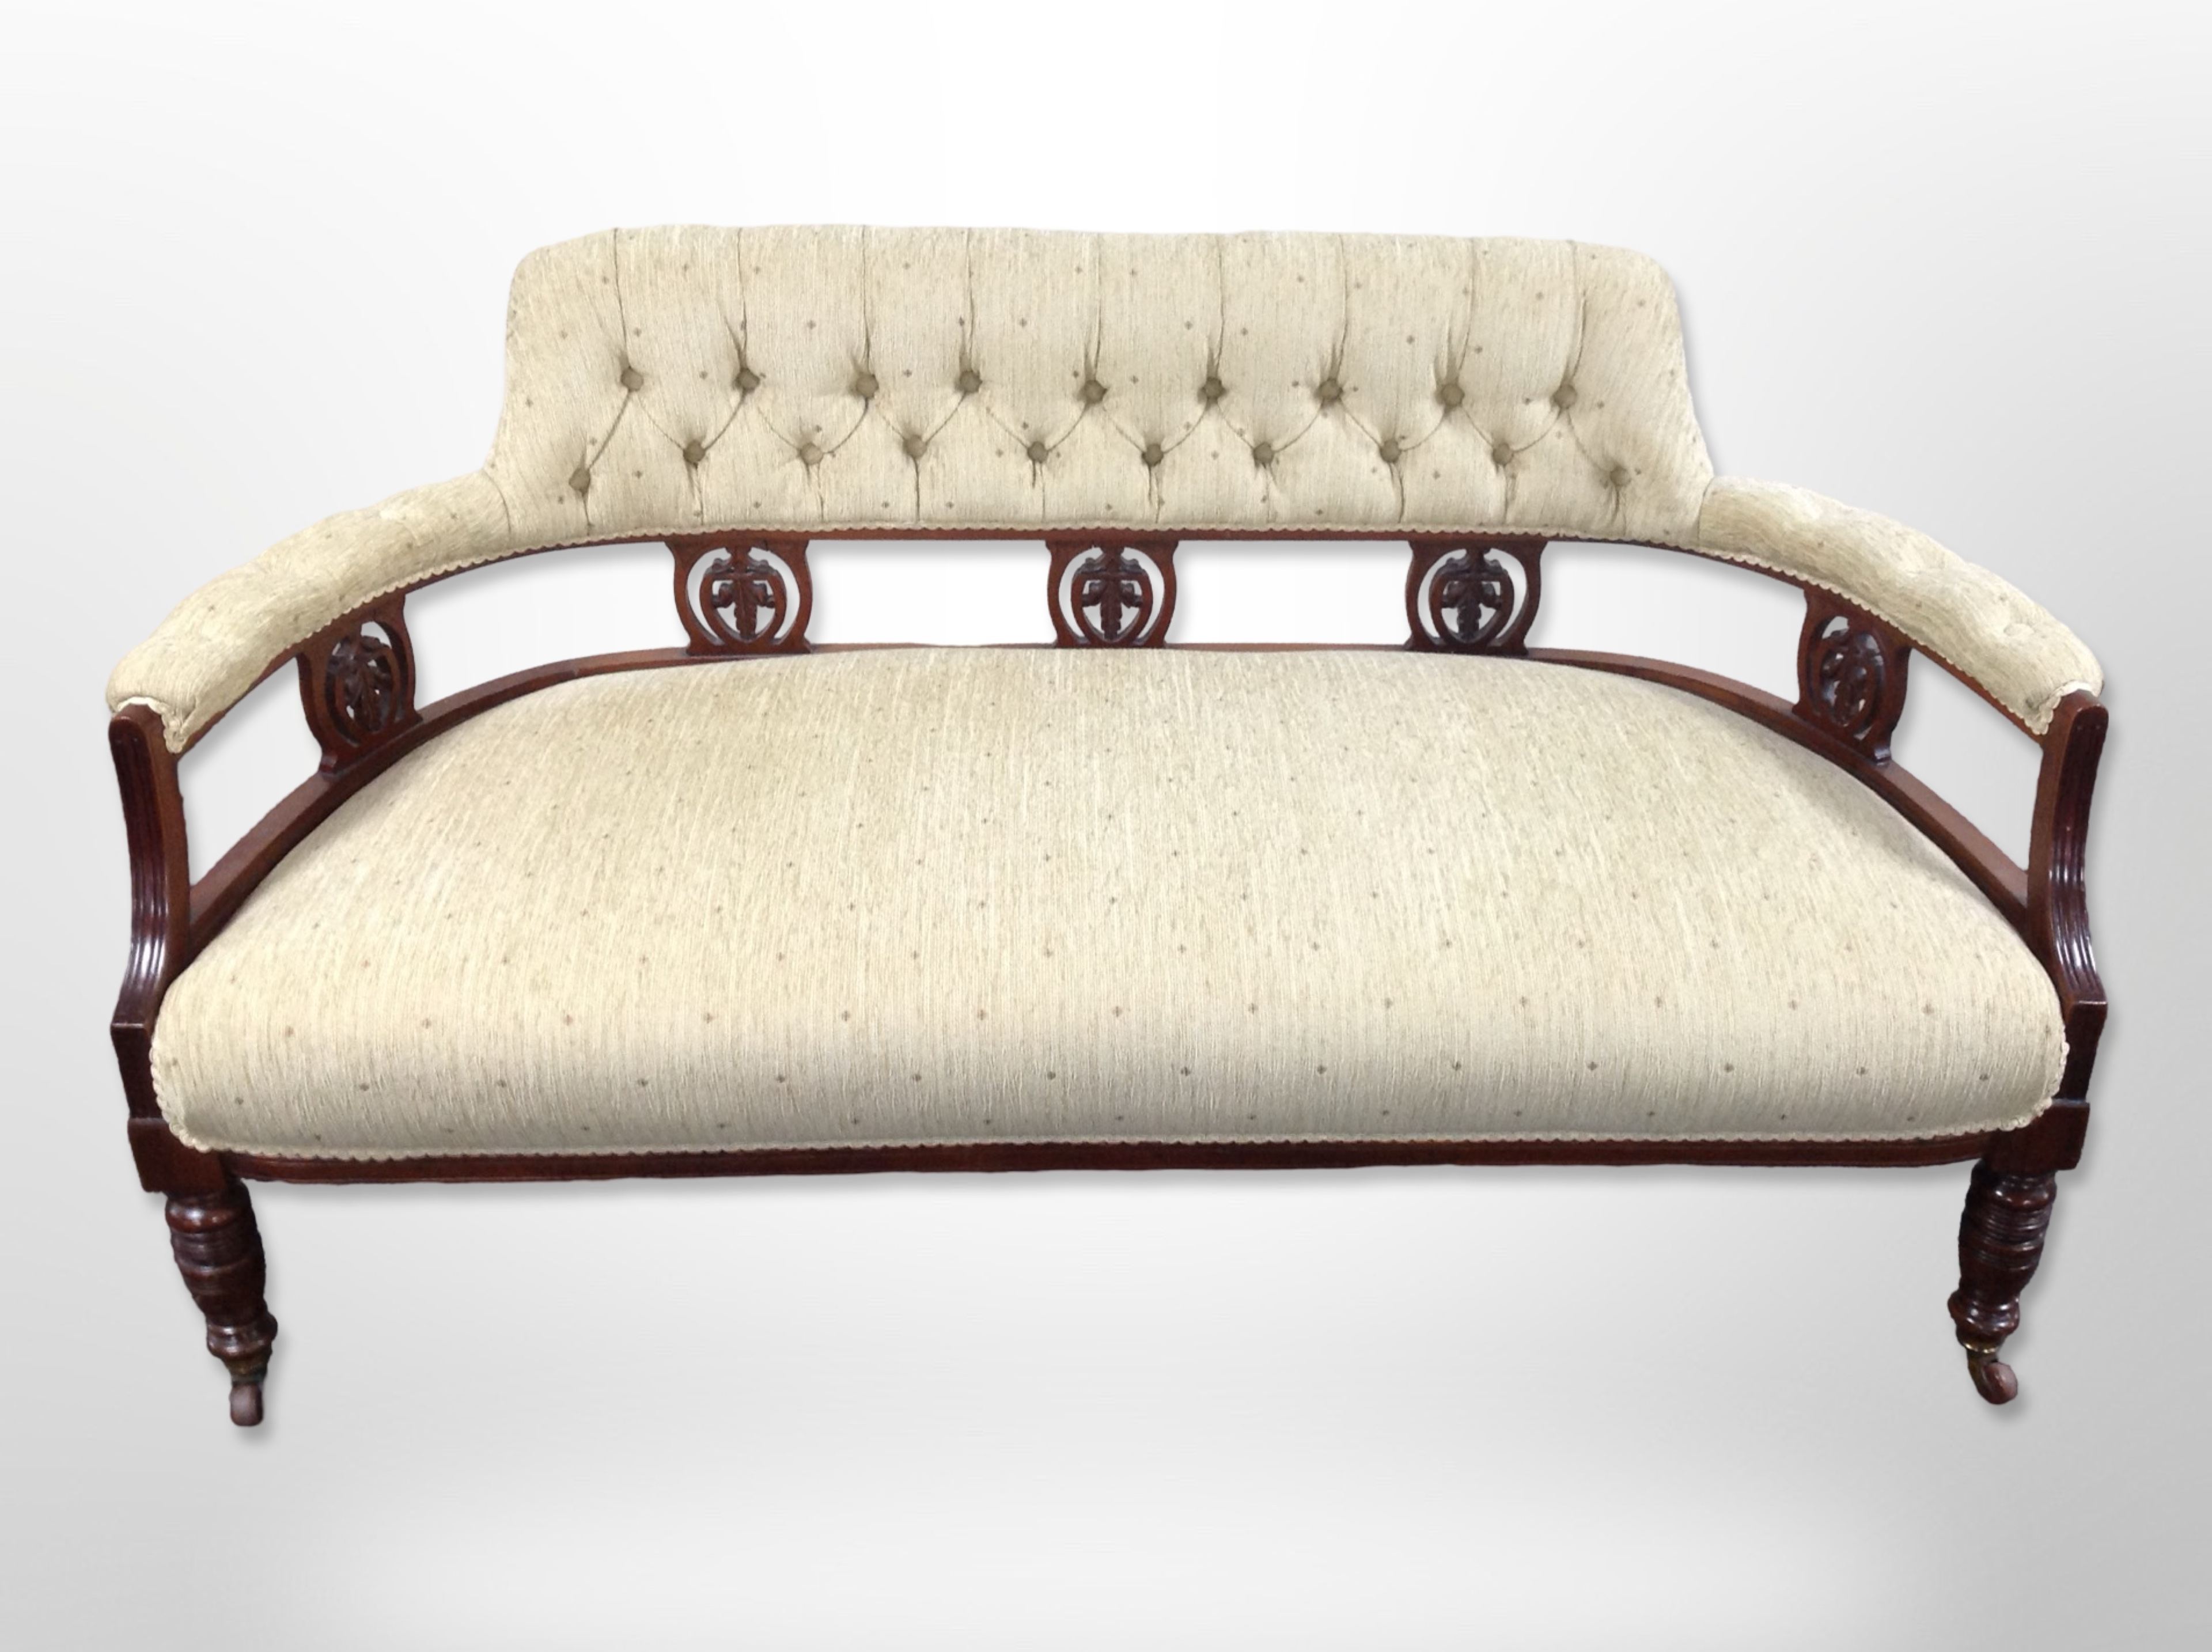 An Edwardian walnut framed salon settee in buttoned upholstery 142 cm long x 71 cm deep x 76 cm